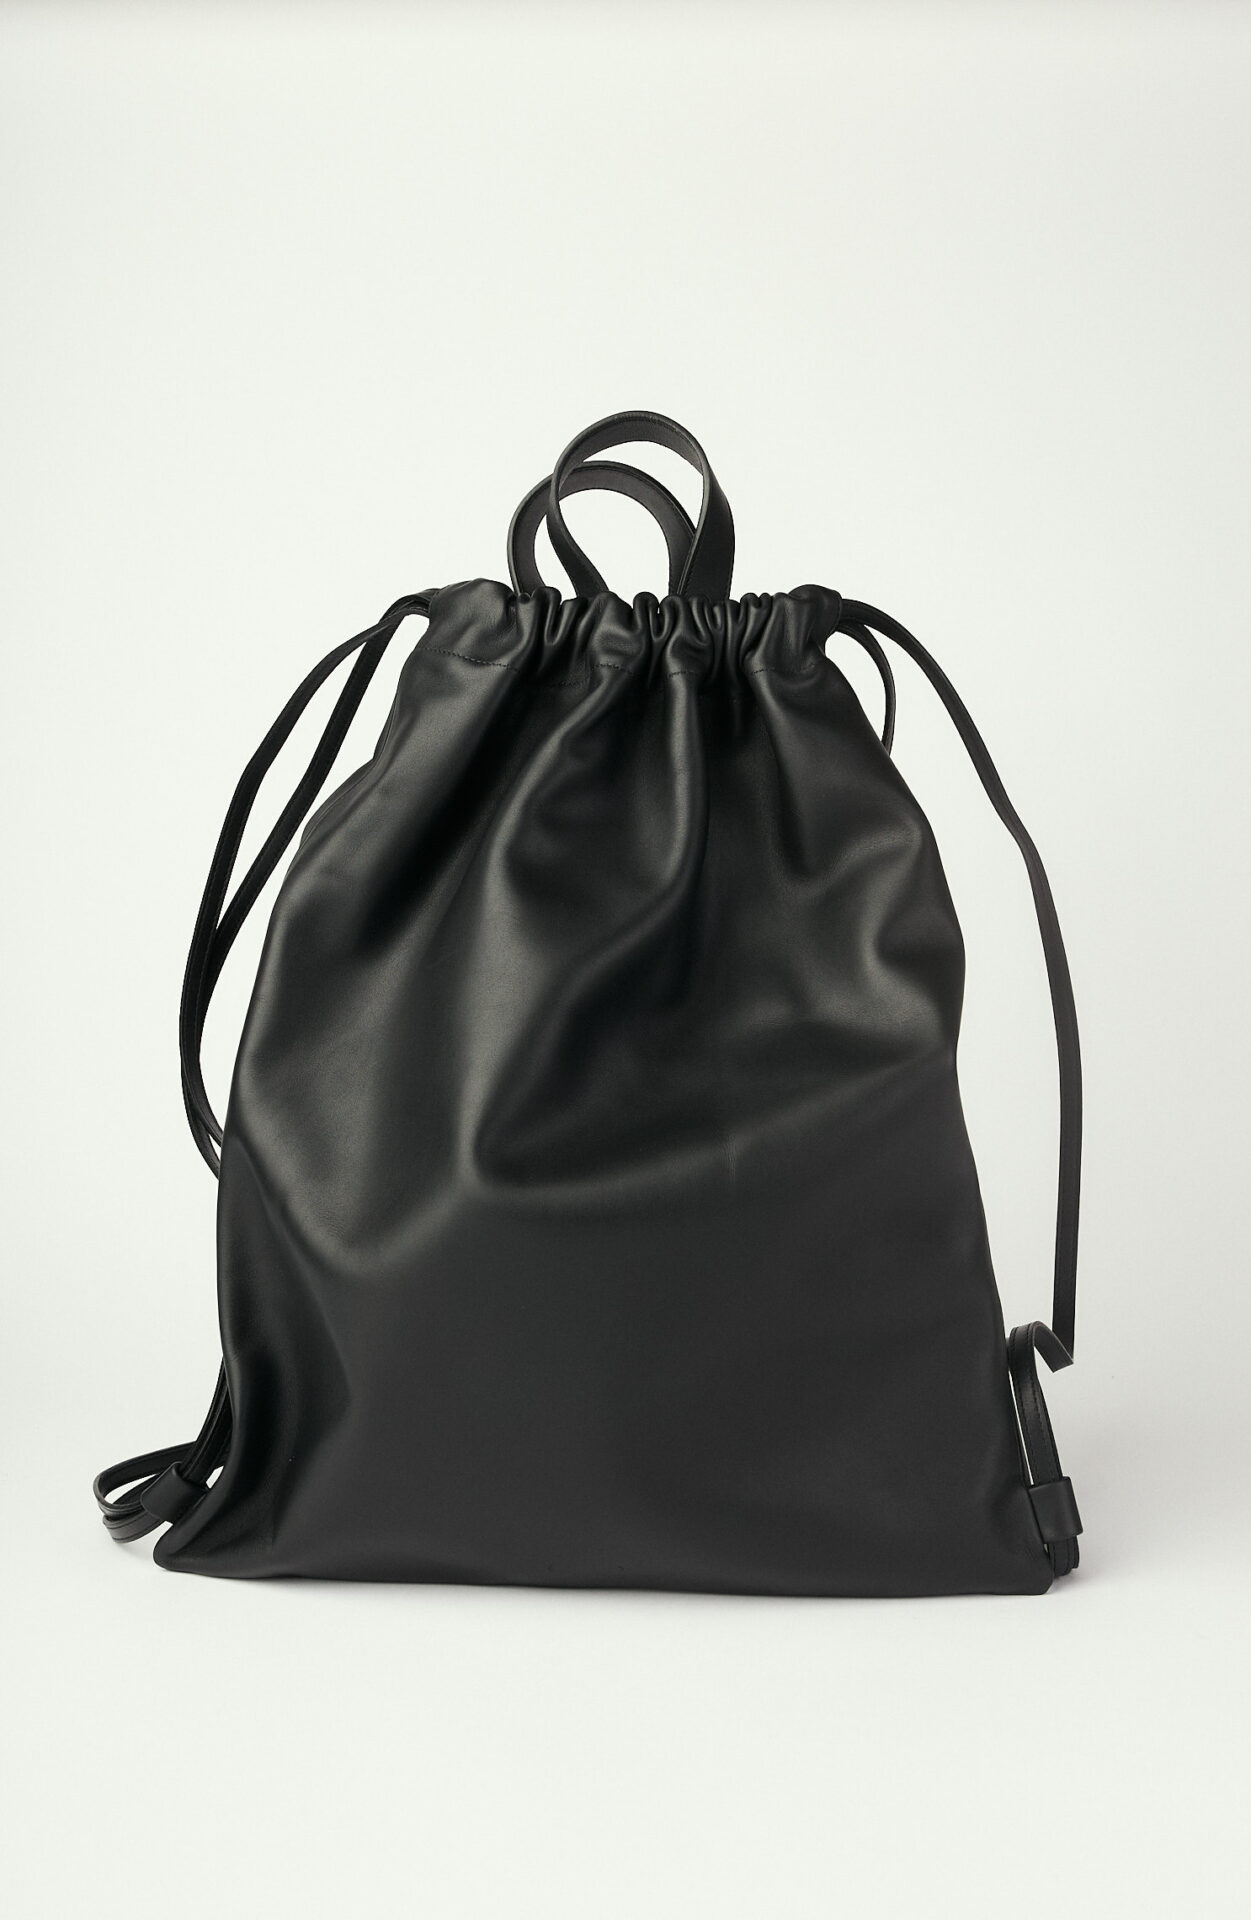 Bag "AB 18.3" in black